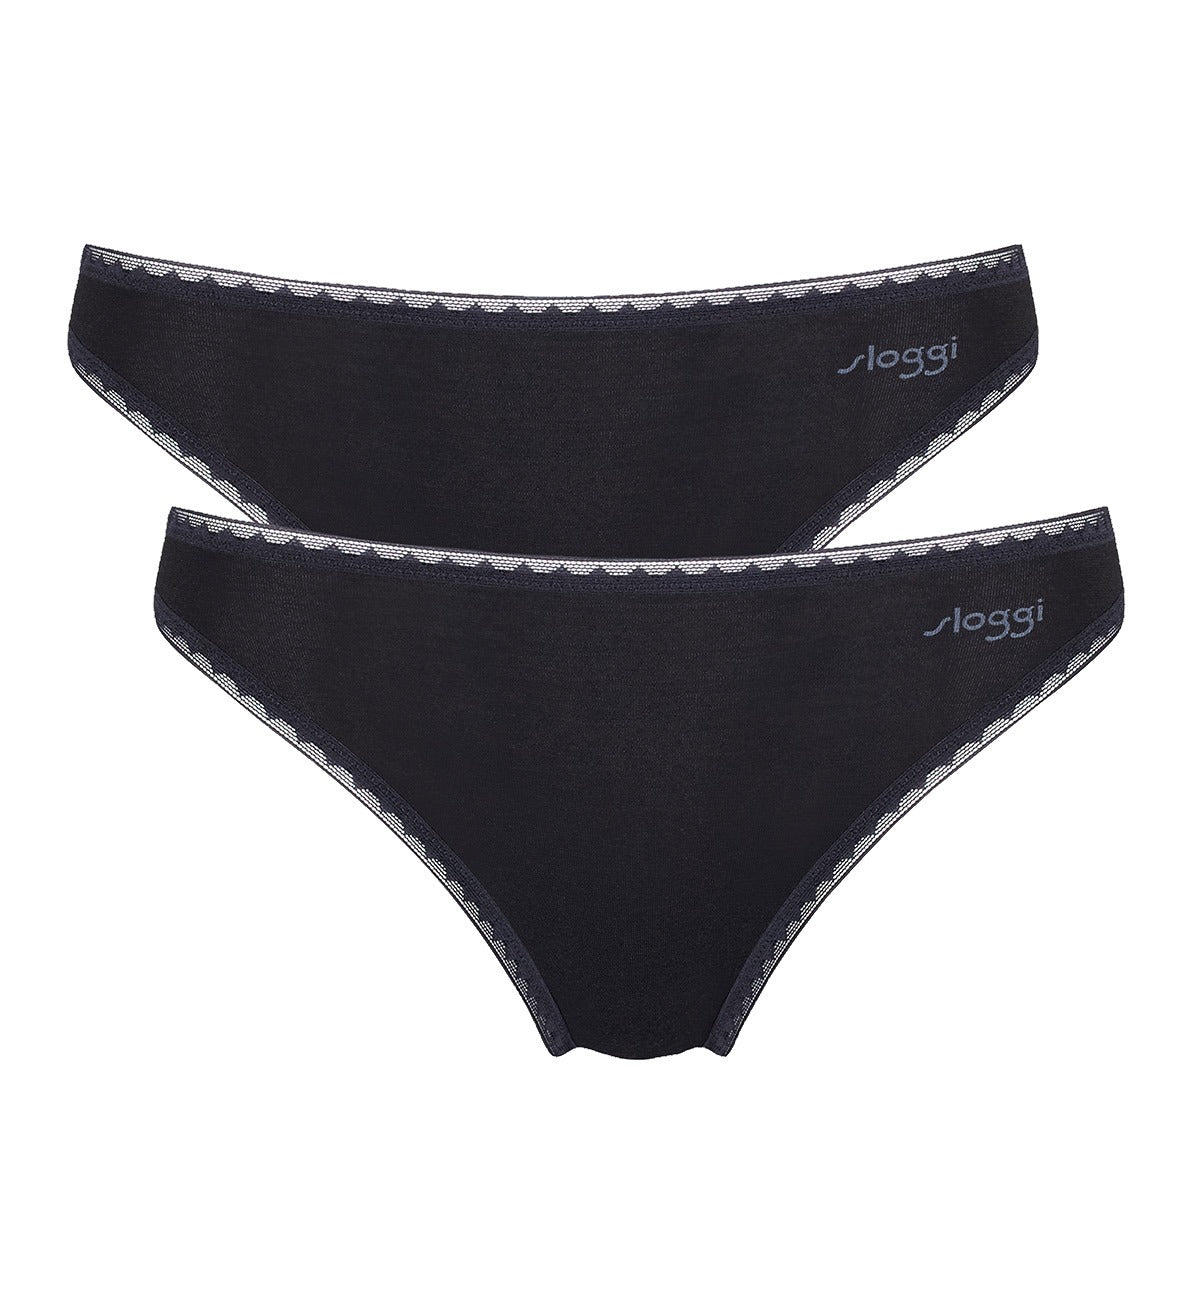 2 Underwear Women's Cotton Elastic sloggi Pant High Cut Tai 100